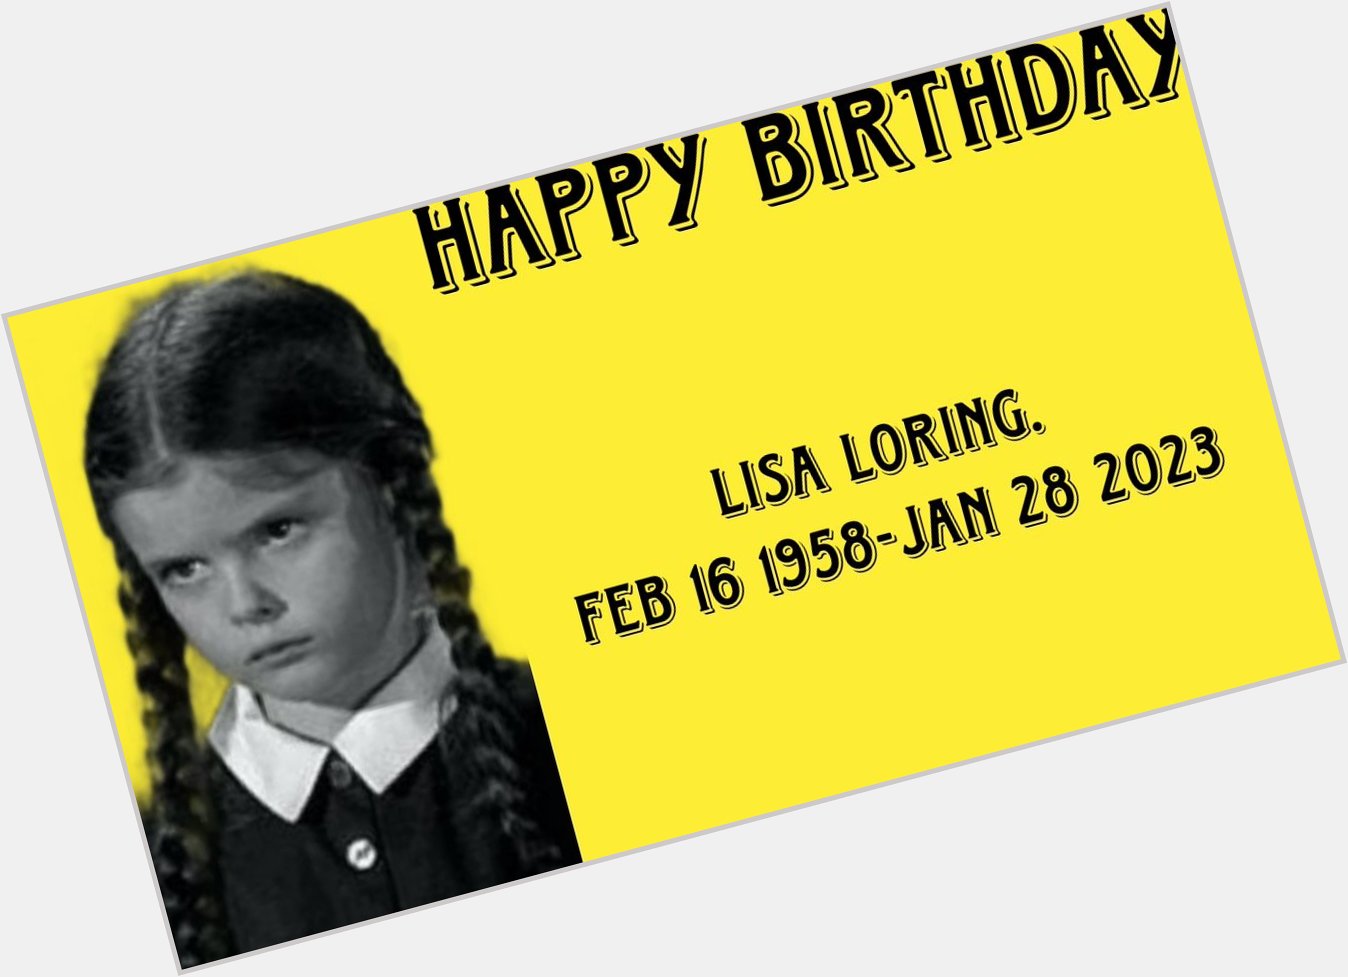 Happy birthday Lisa loring. 